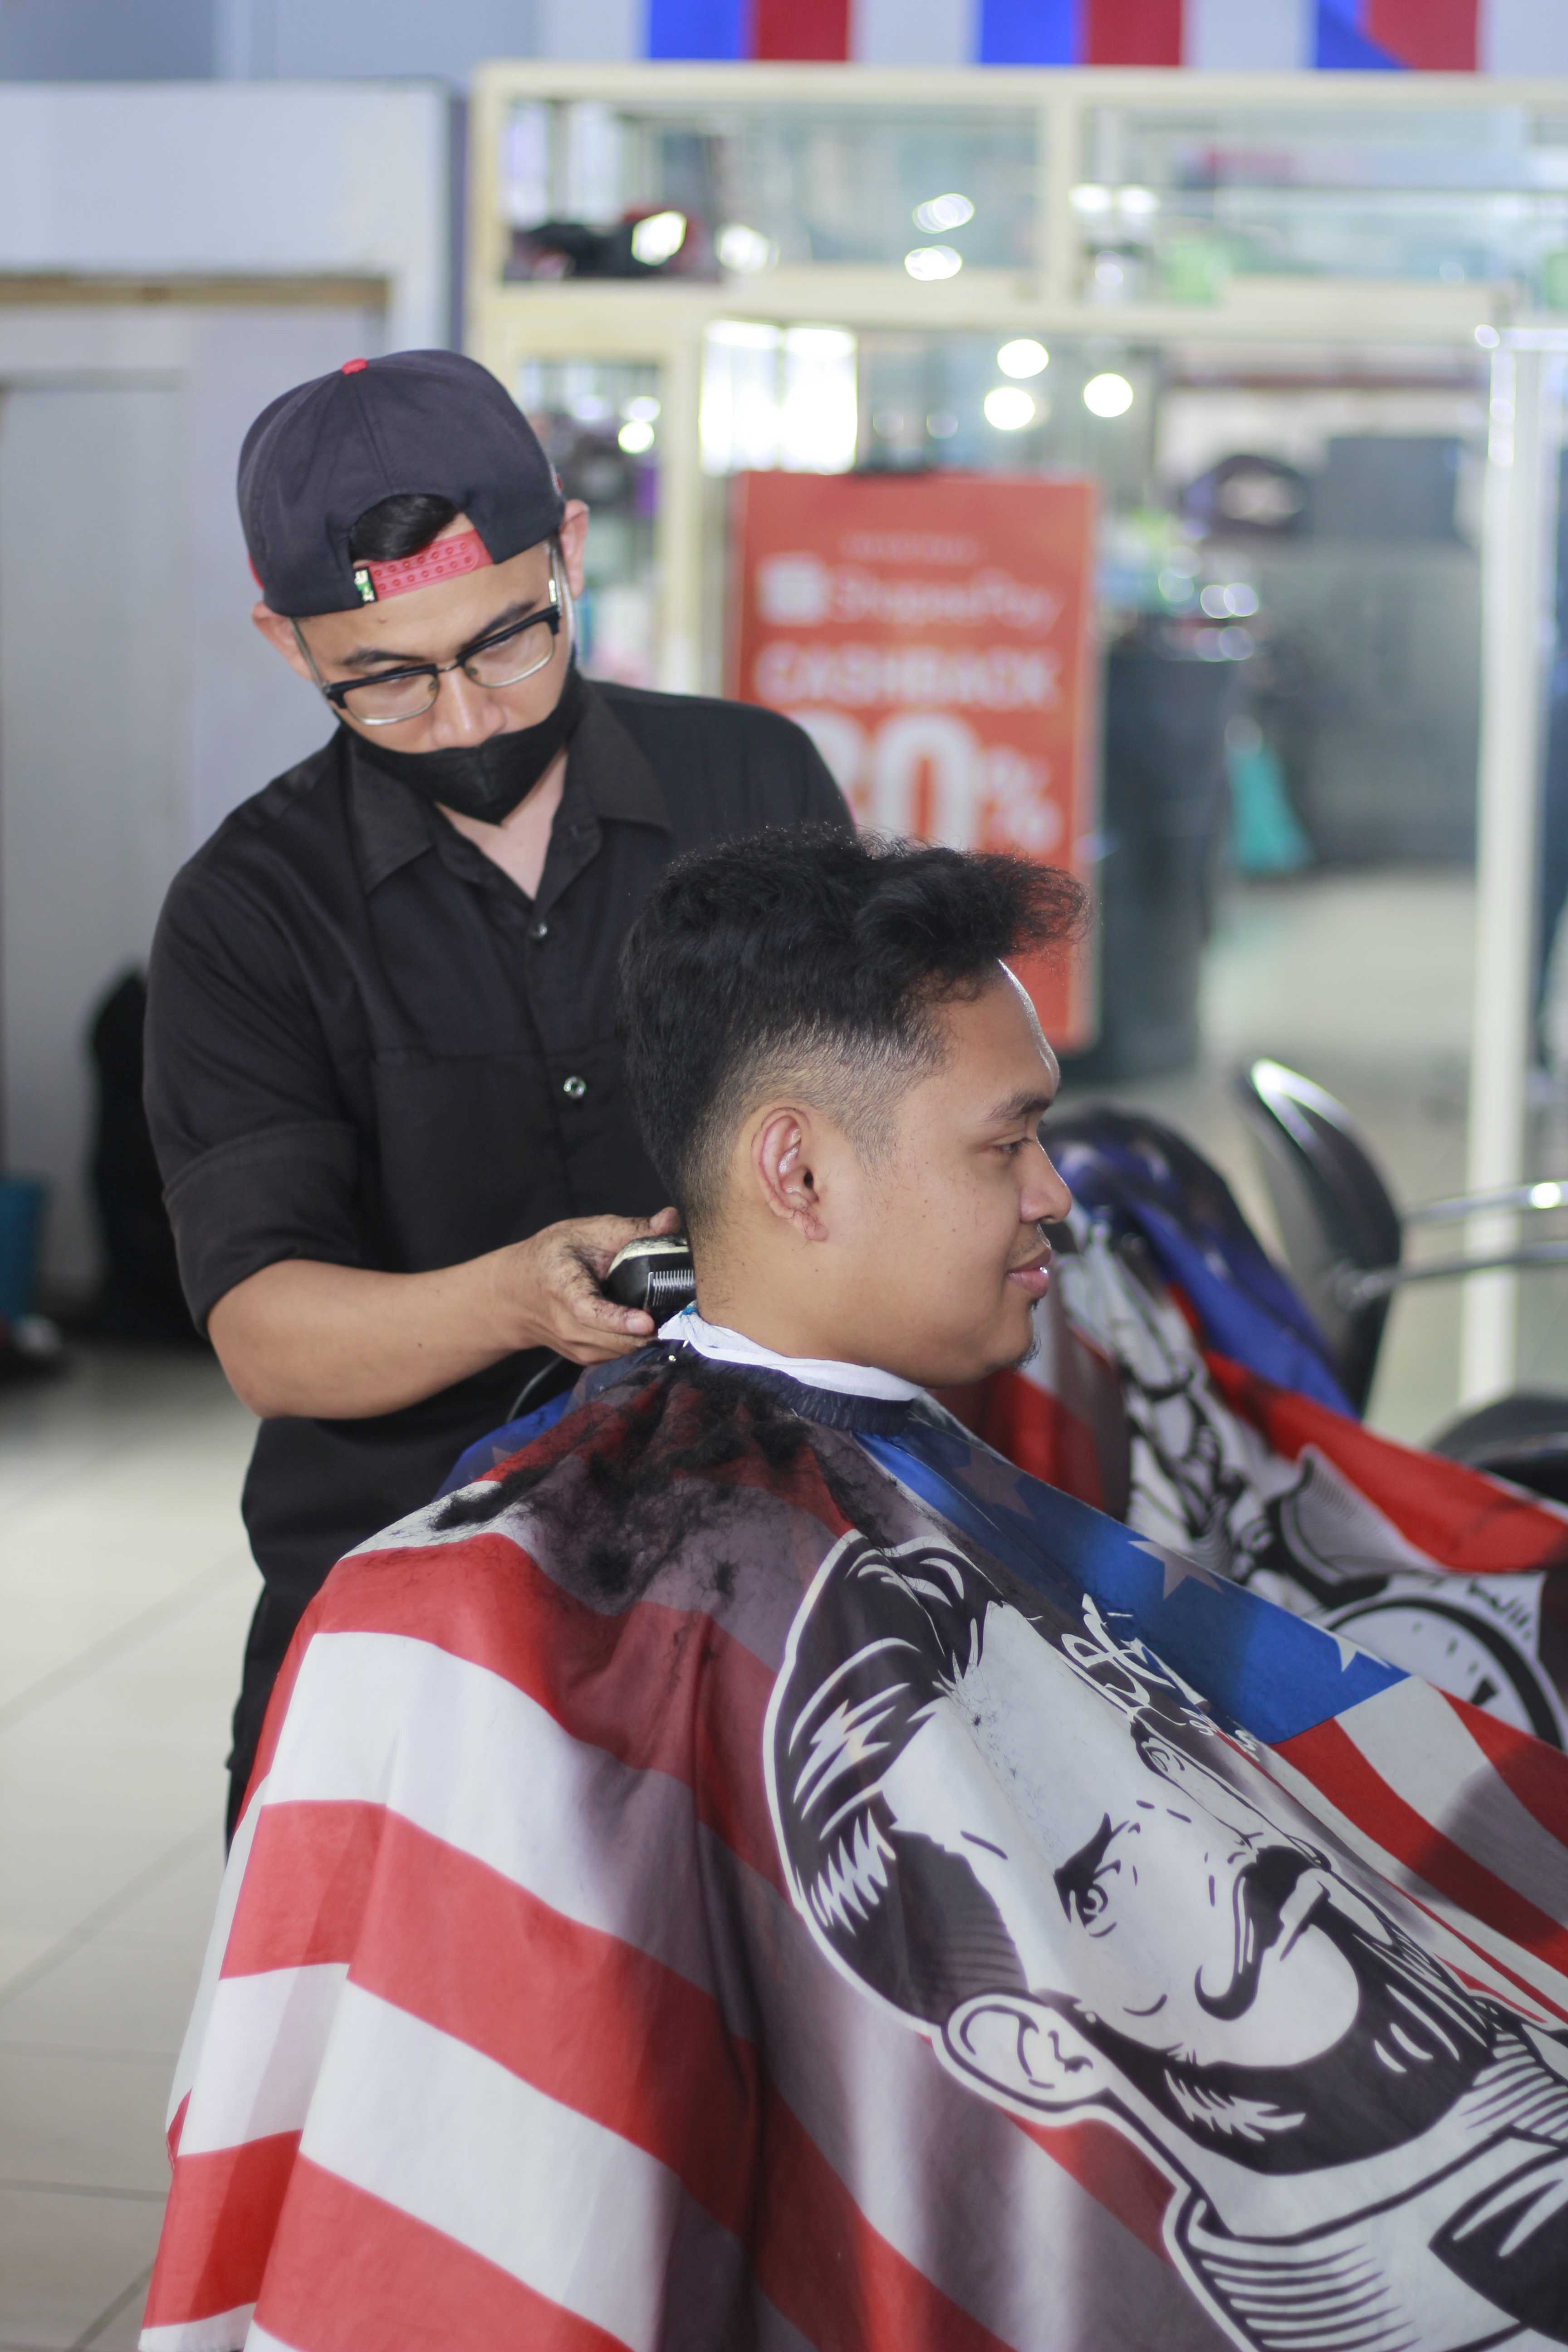 Harga Salon Di Kota Malang Profesional